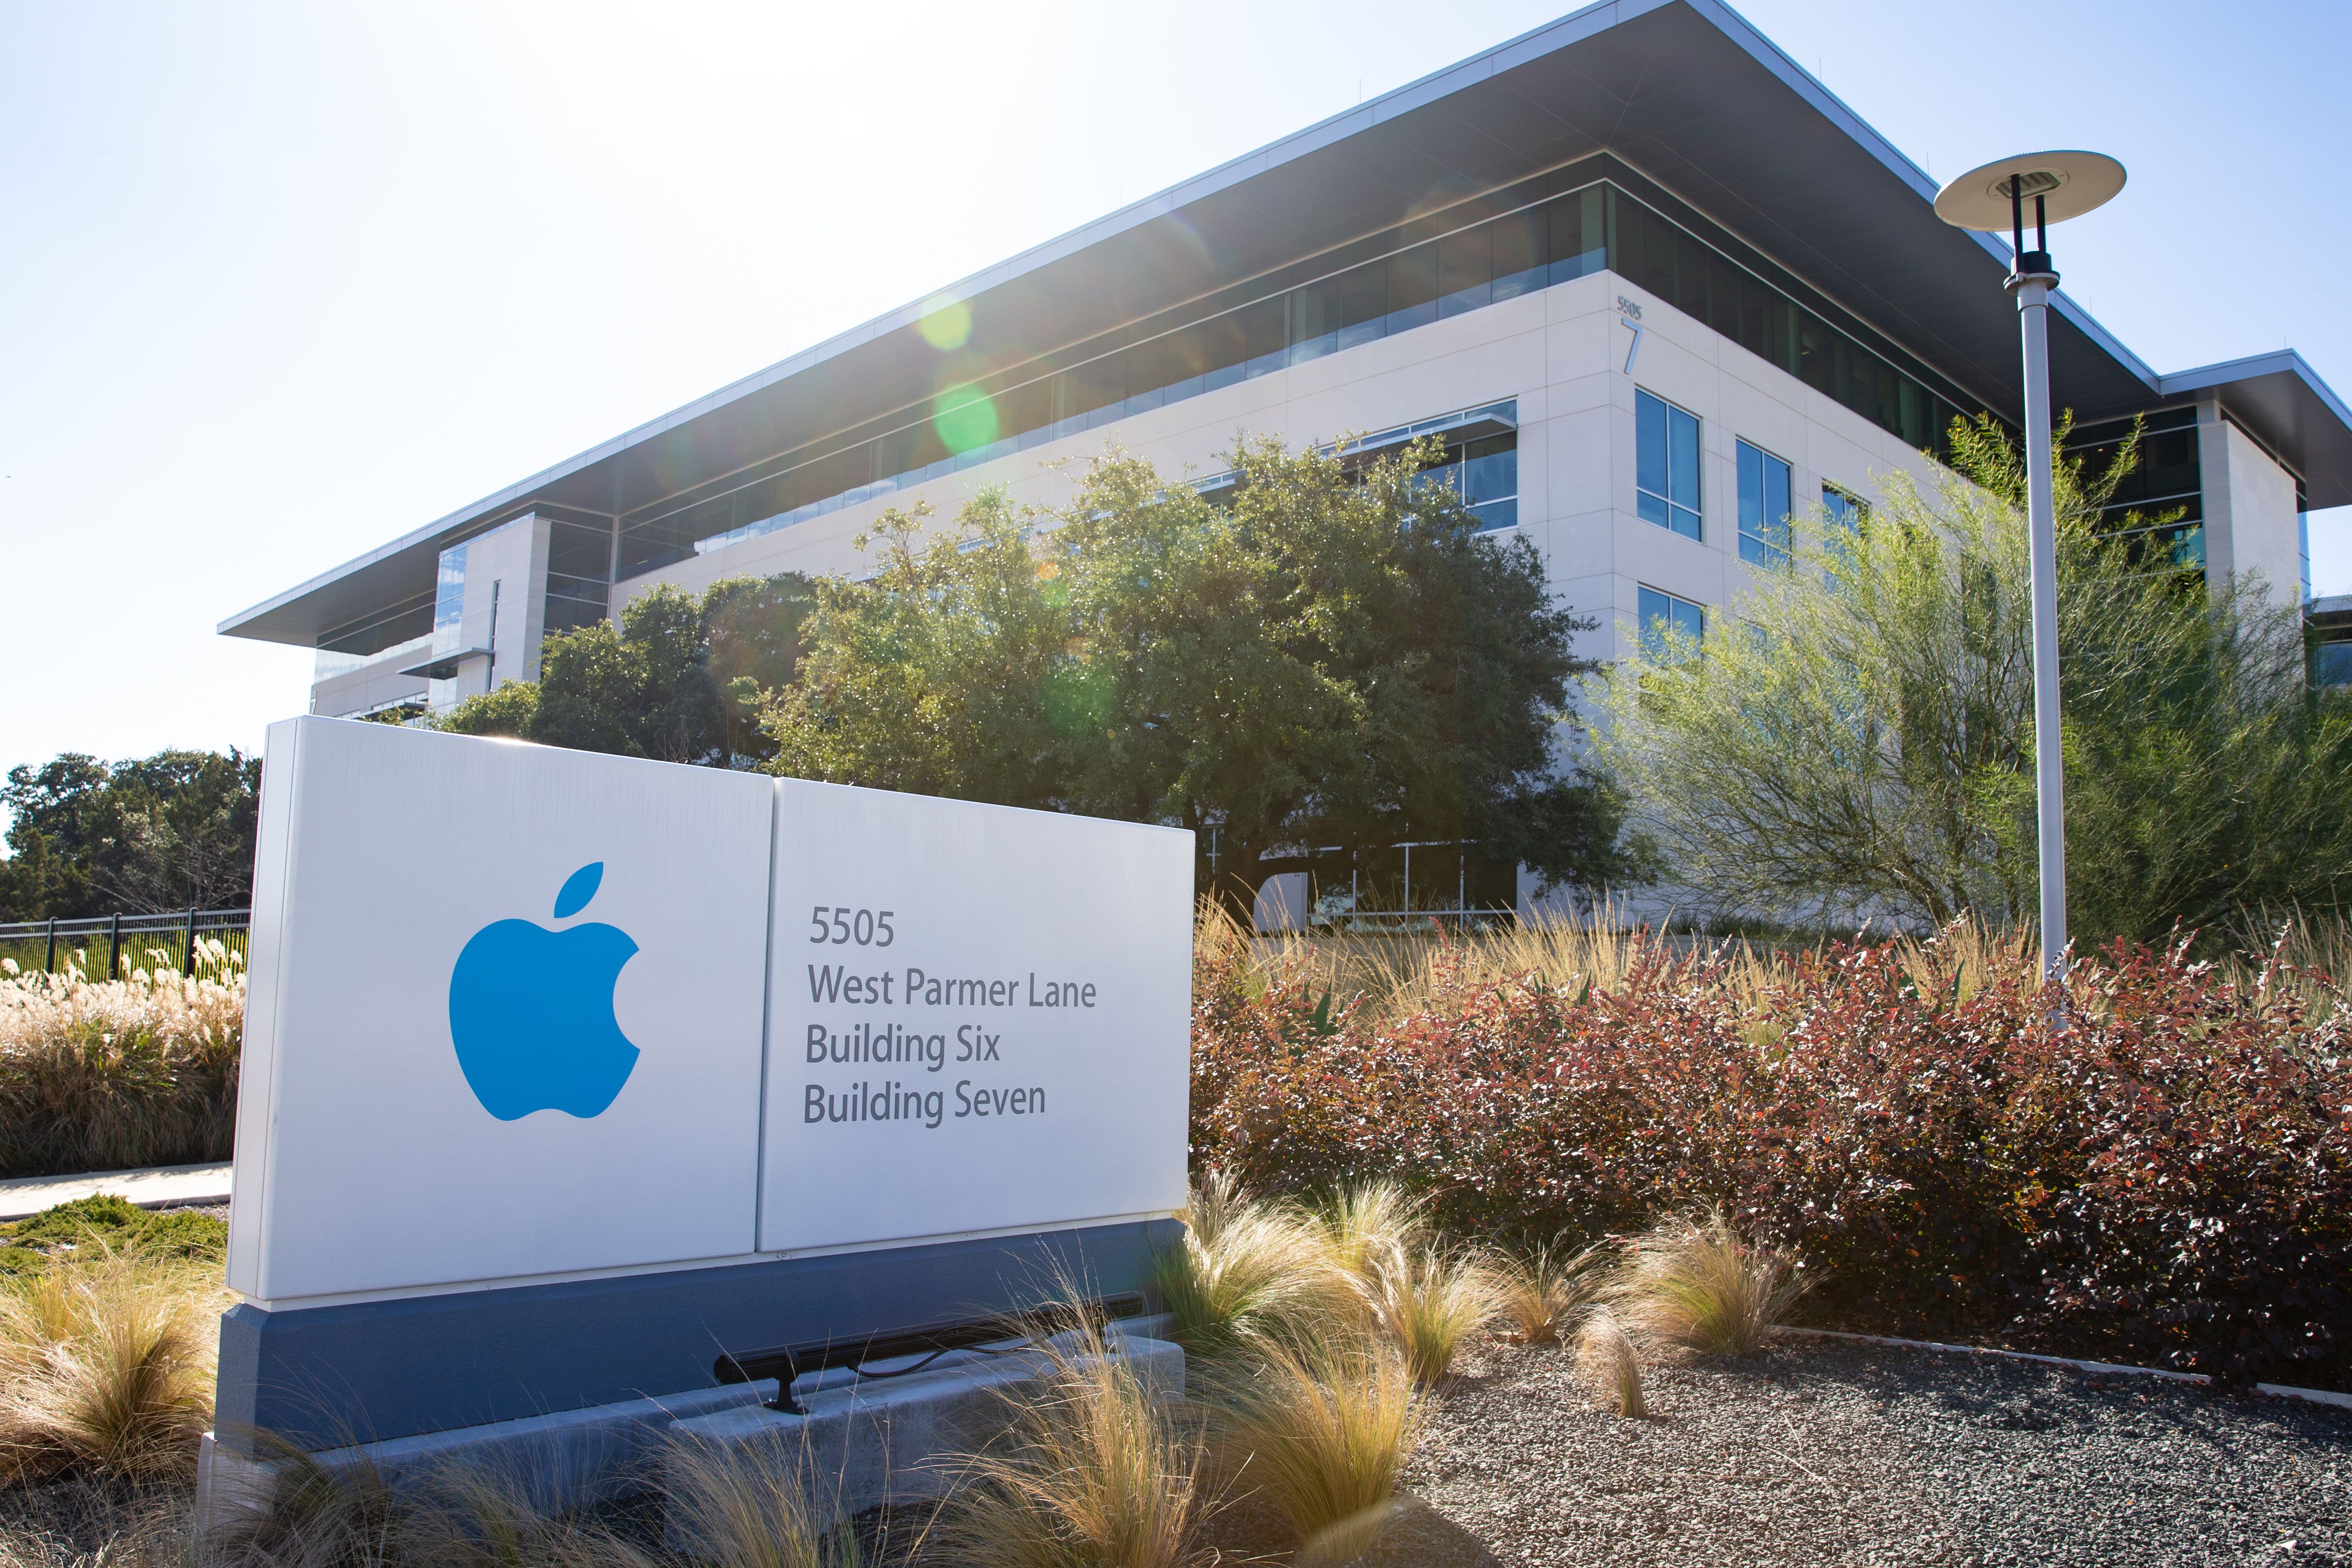 Apple to invest $1 billion for Austin, Texas expansion plan